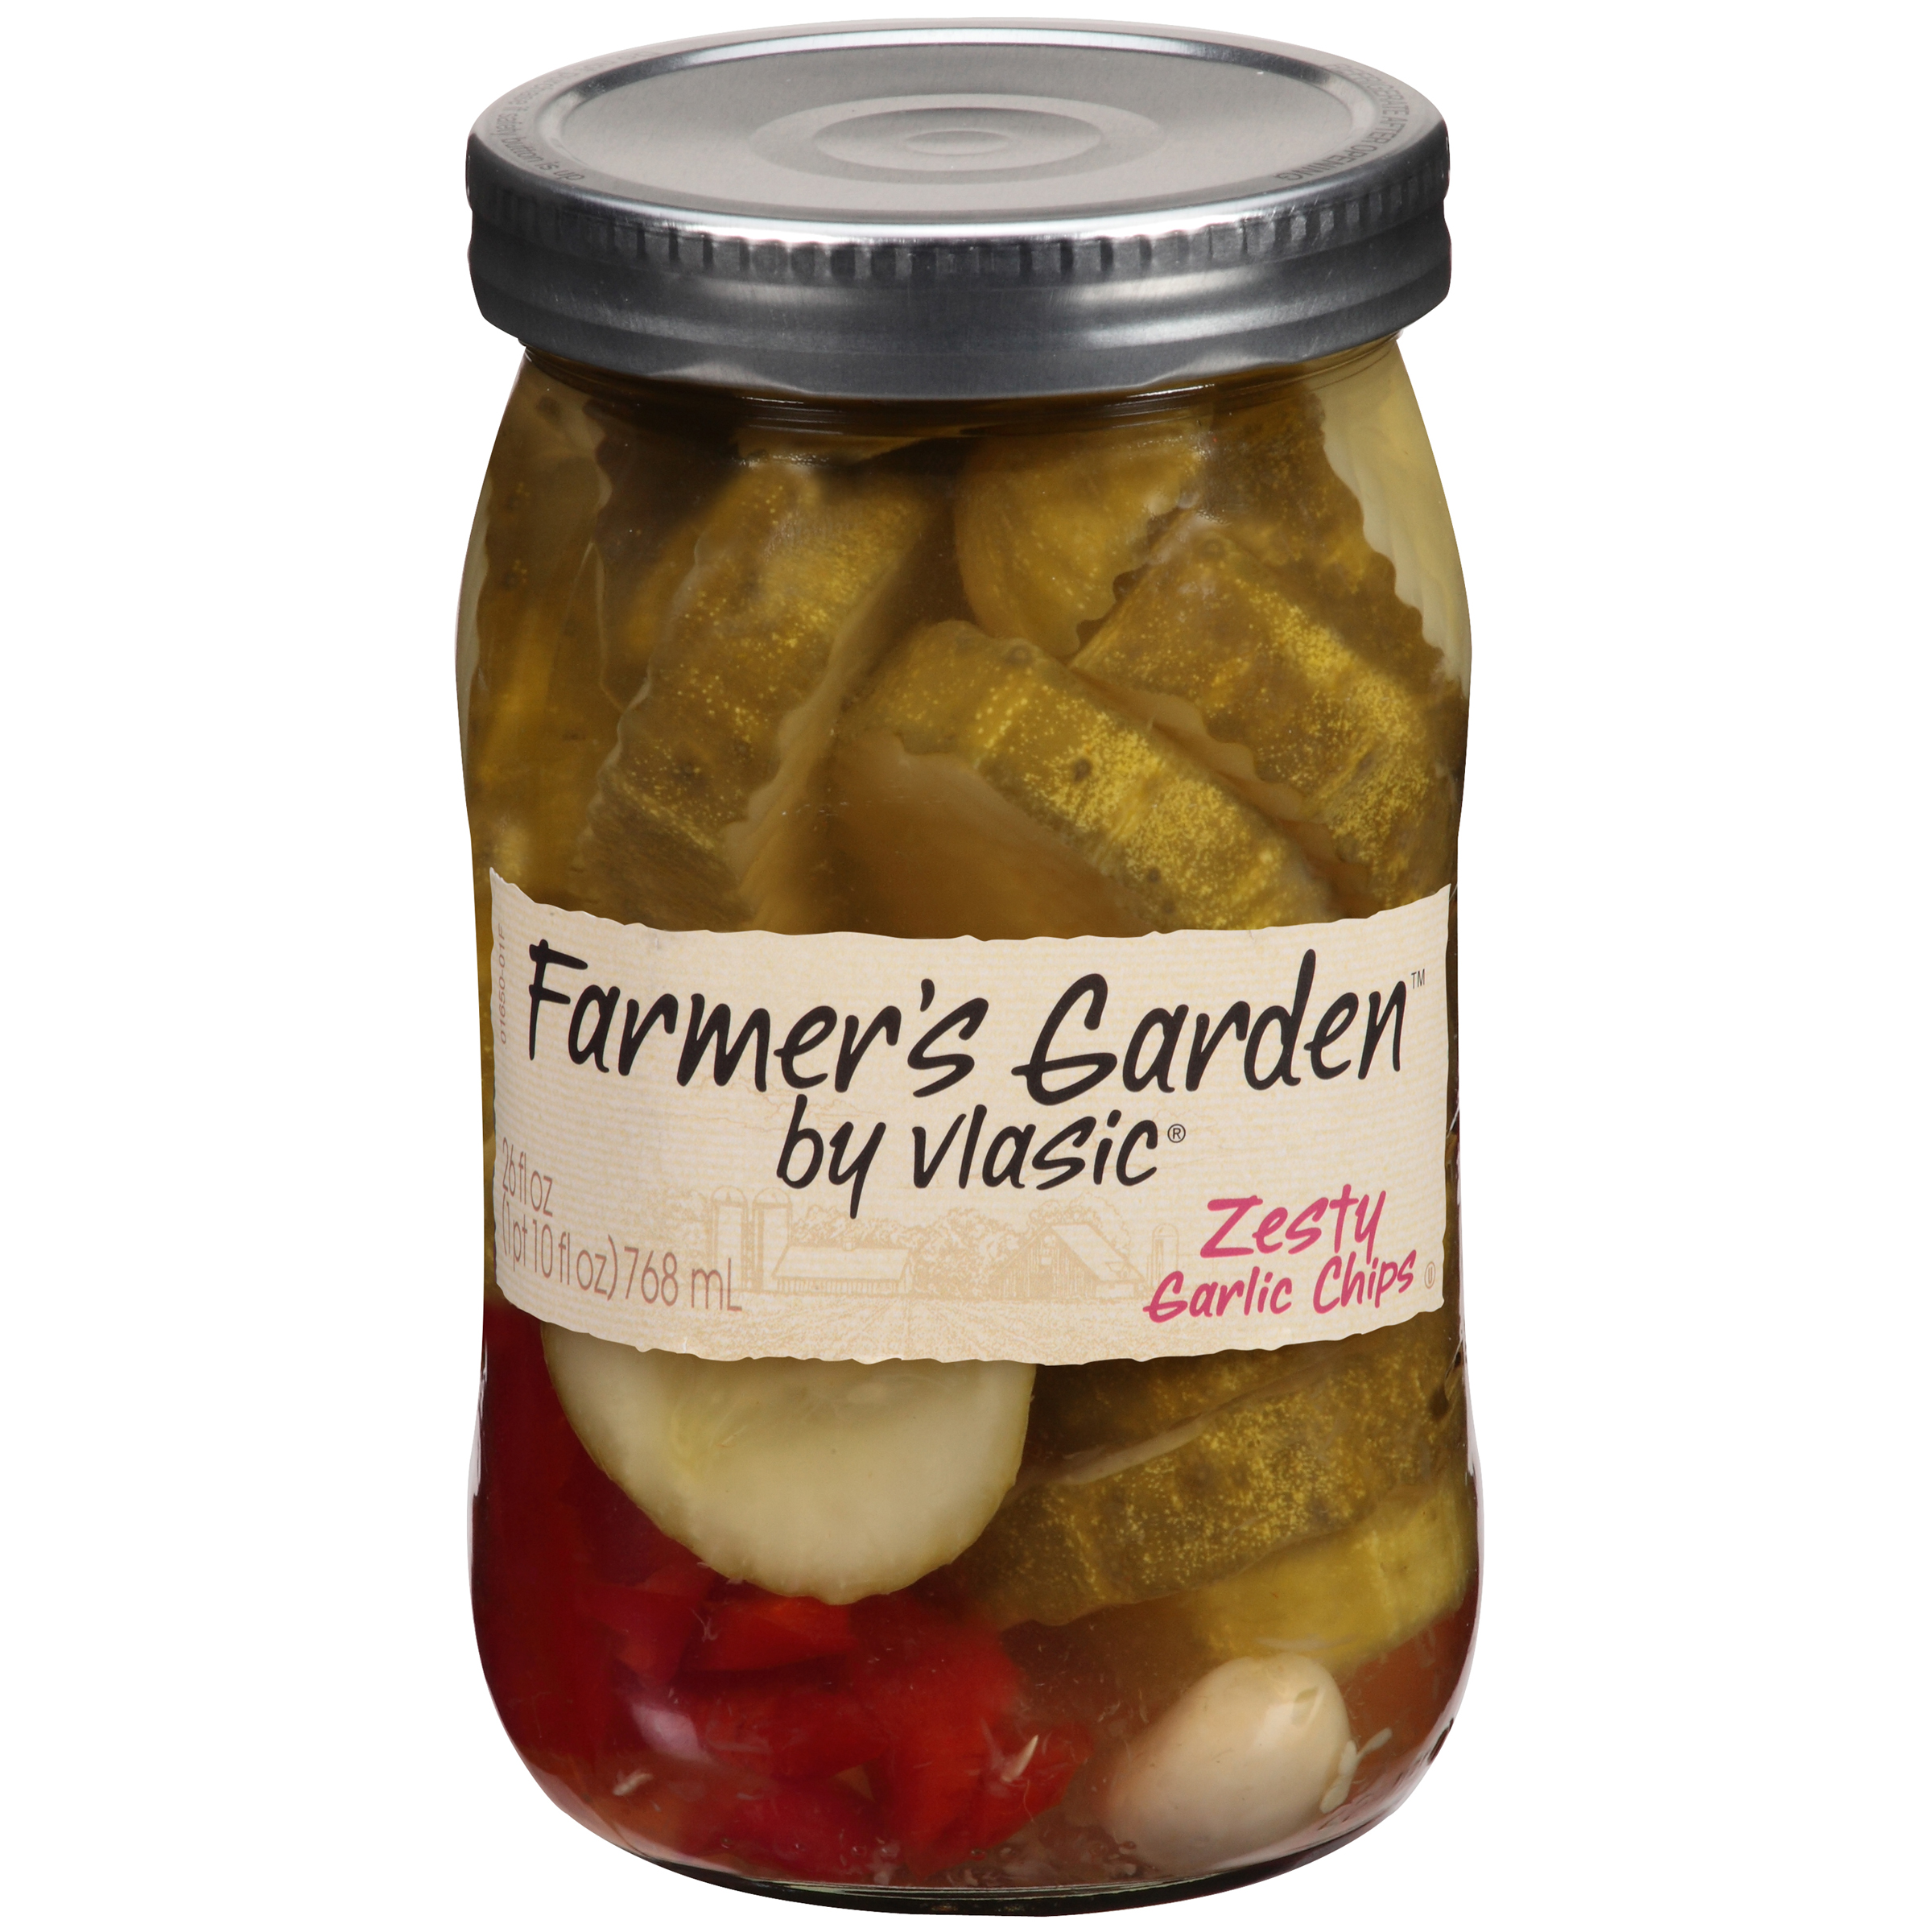 Vlasic Farmers Garden Zesty Garlic Chips Pickles 26 fl oz - image 1 of 7